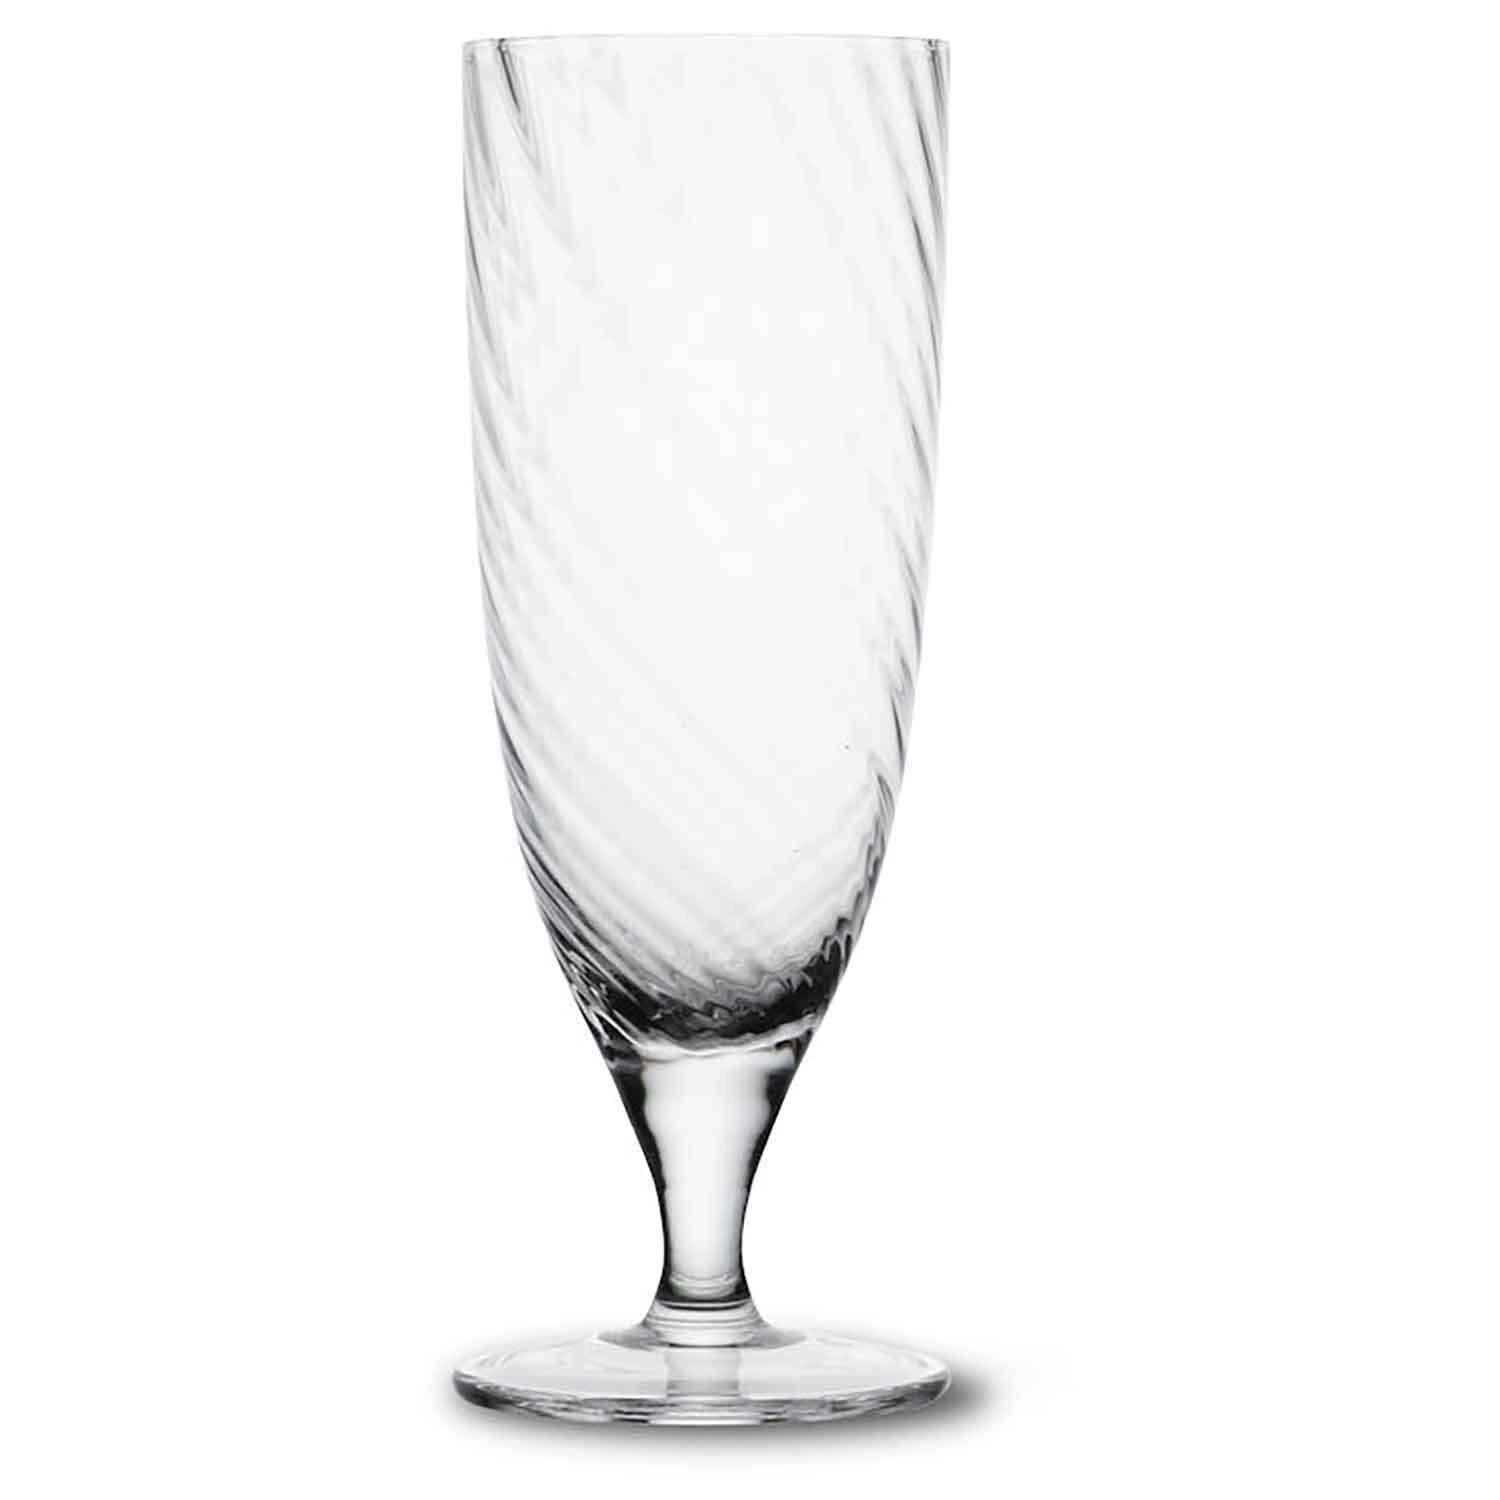 https://royaldesign.com/image/2/byon-opacity-drinking-glass-5